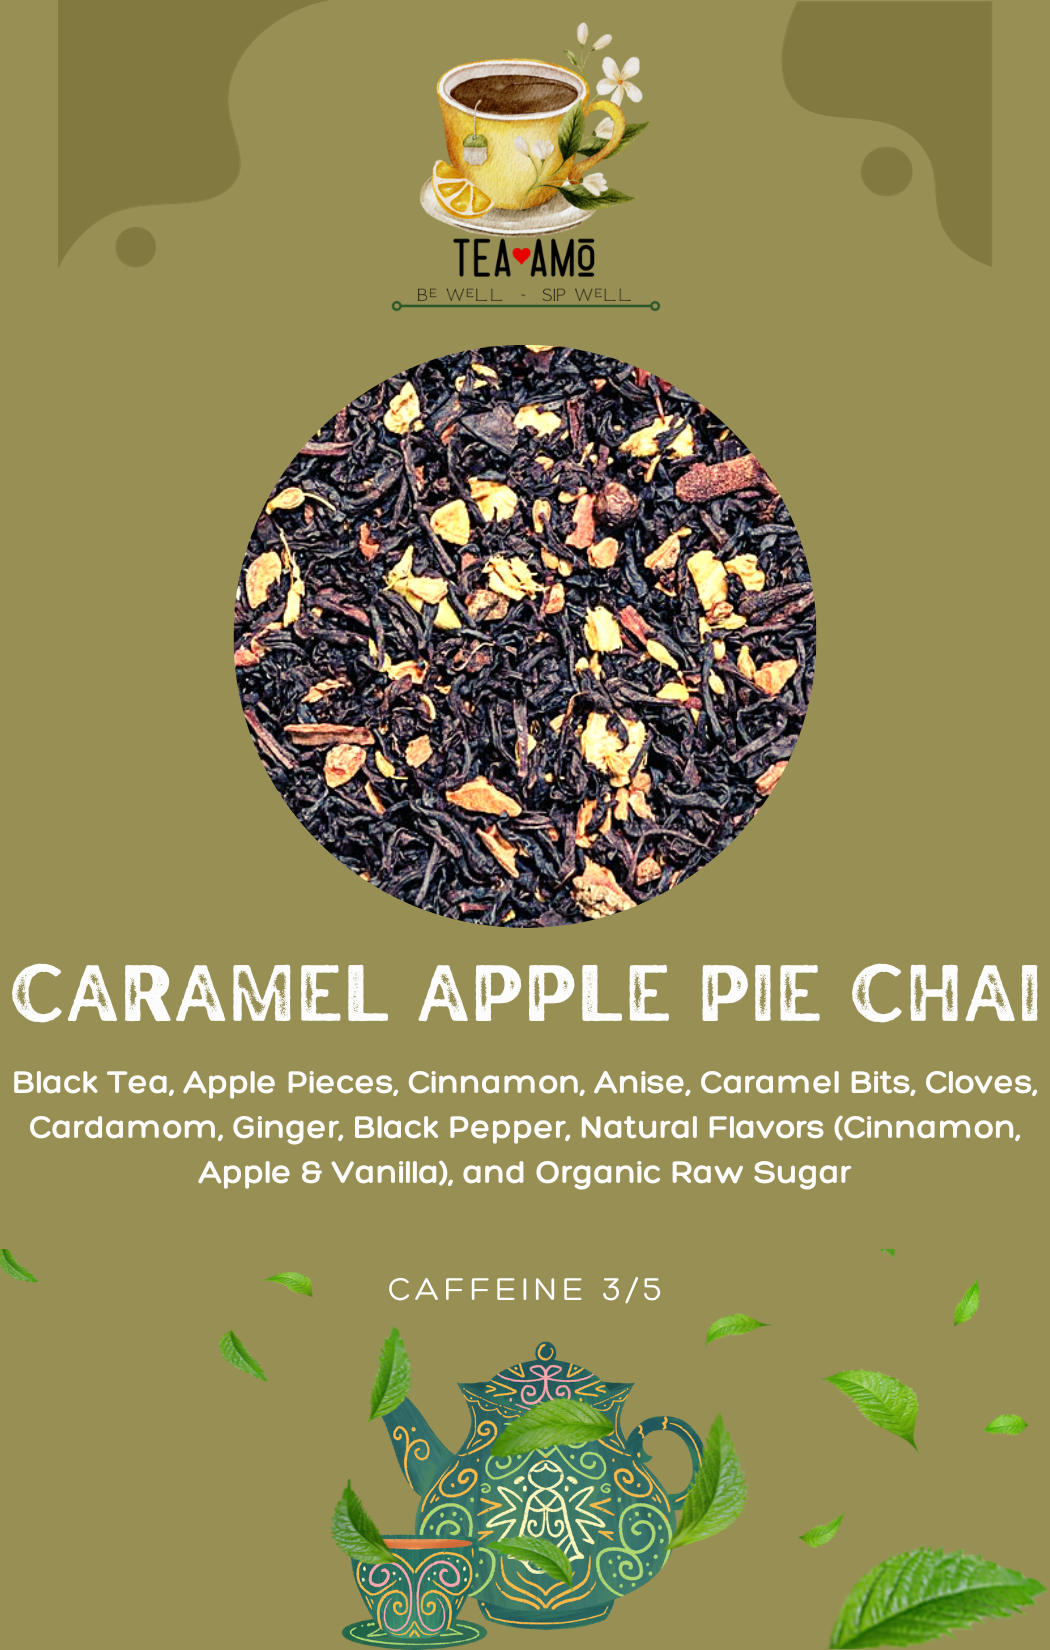 Tea Amo Wellness: Caramel Apple Pie Chai